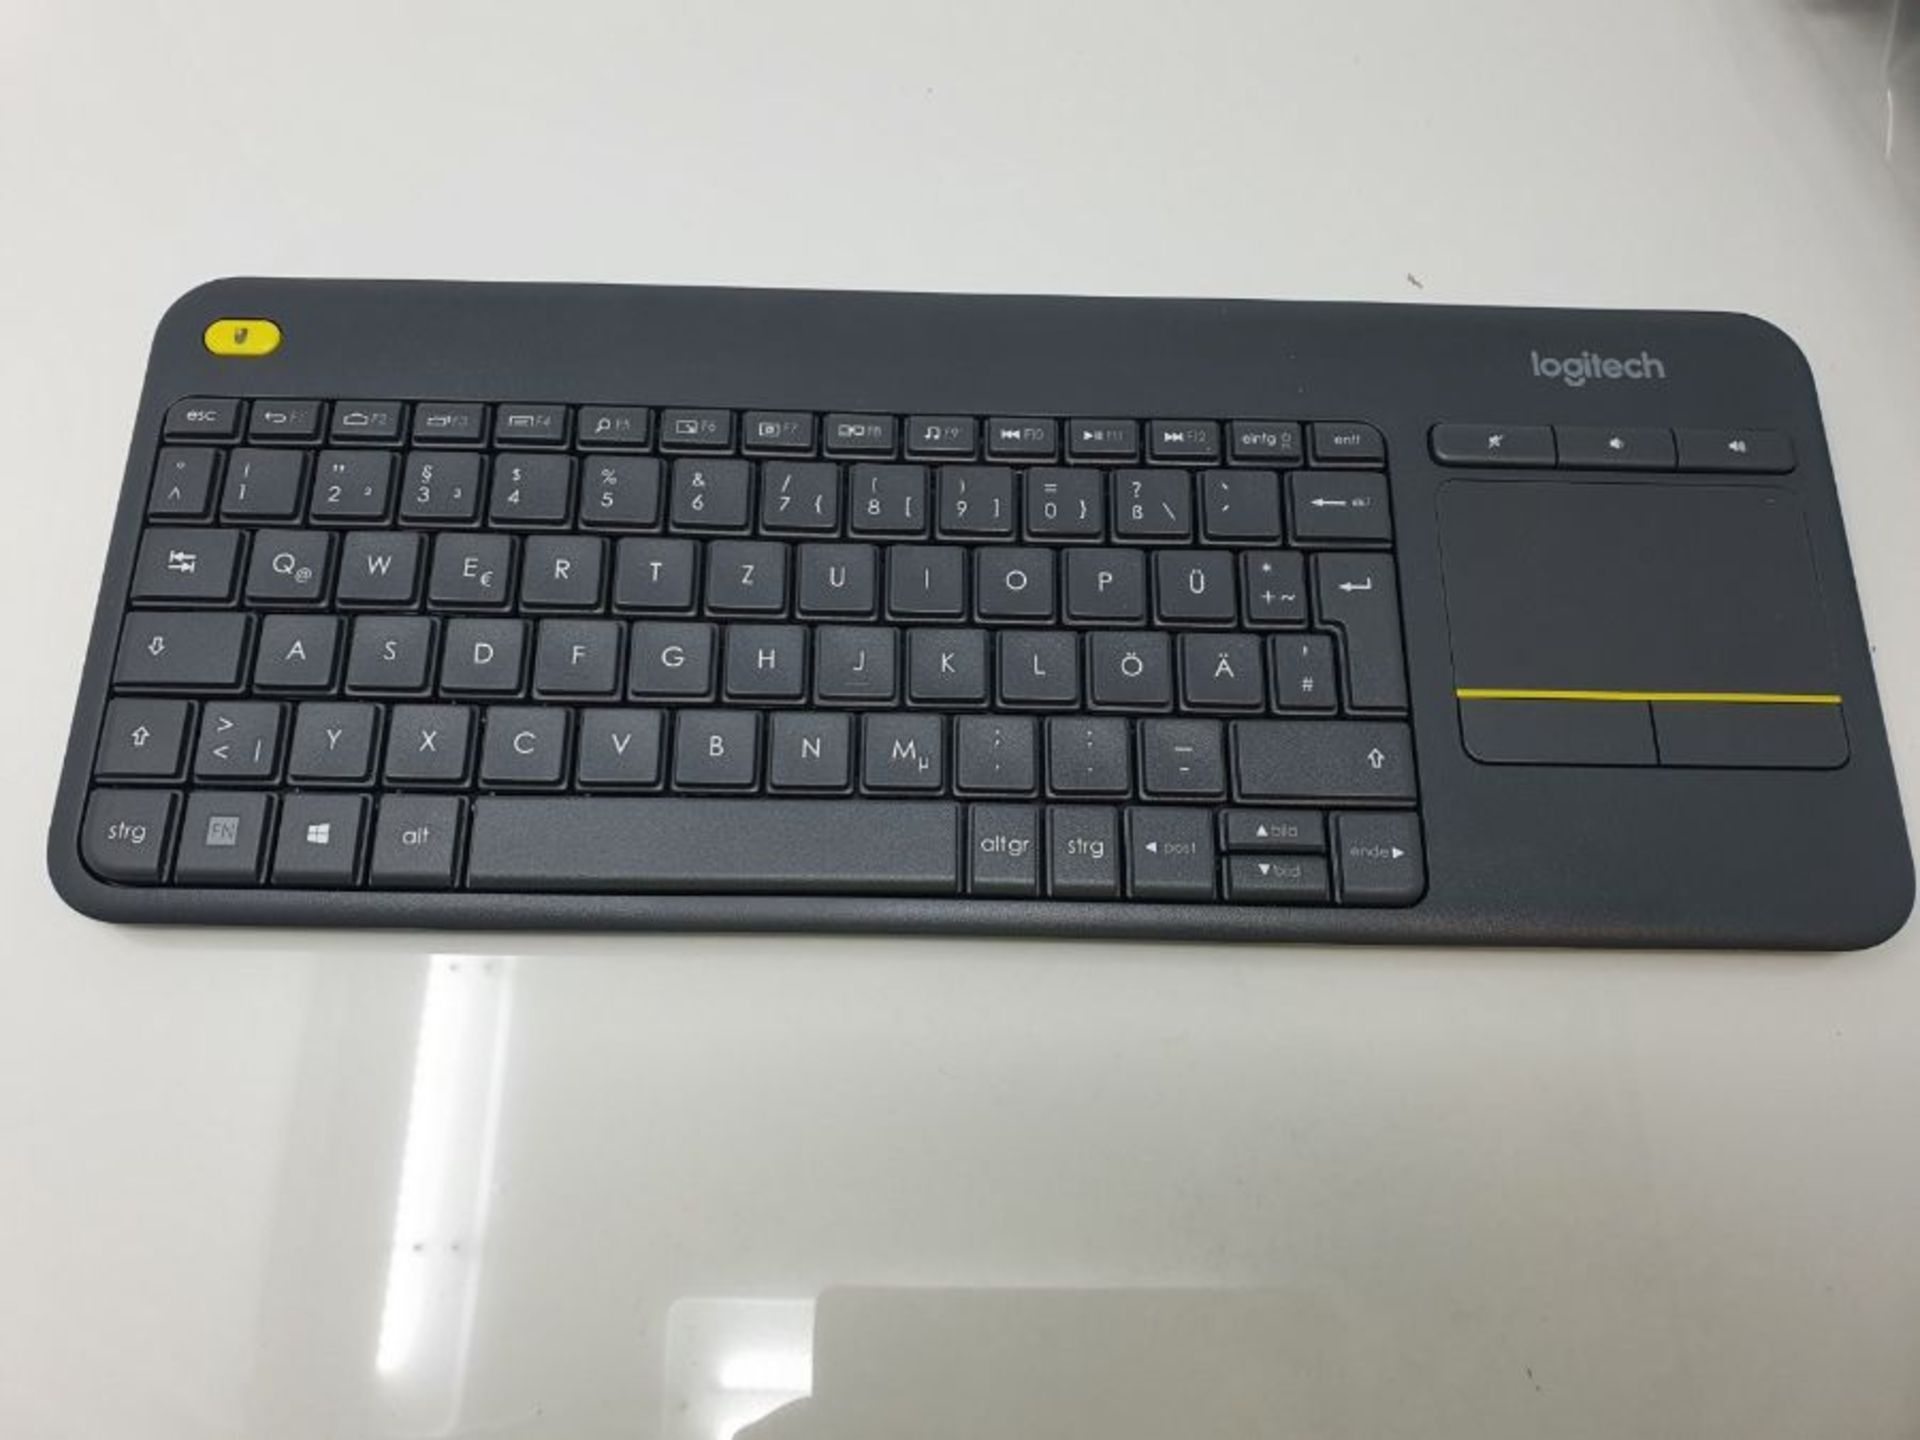 Logitech K400 Plus Wireless Livingroom Keyboard, QWERTZ German Layout - Black - Image 3 of 3